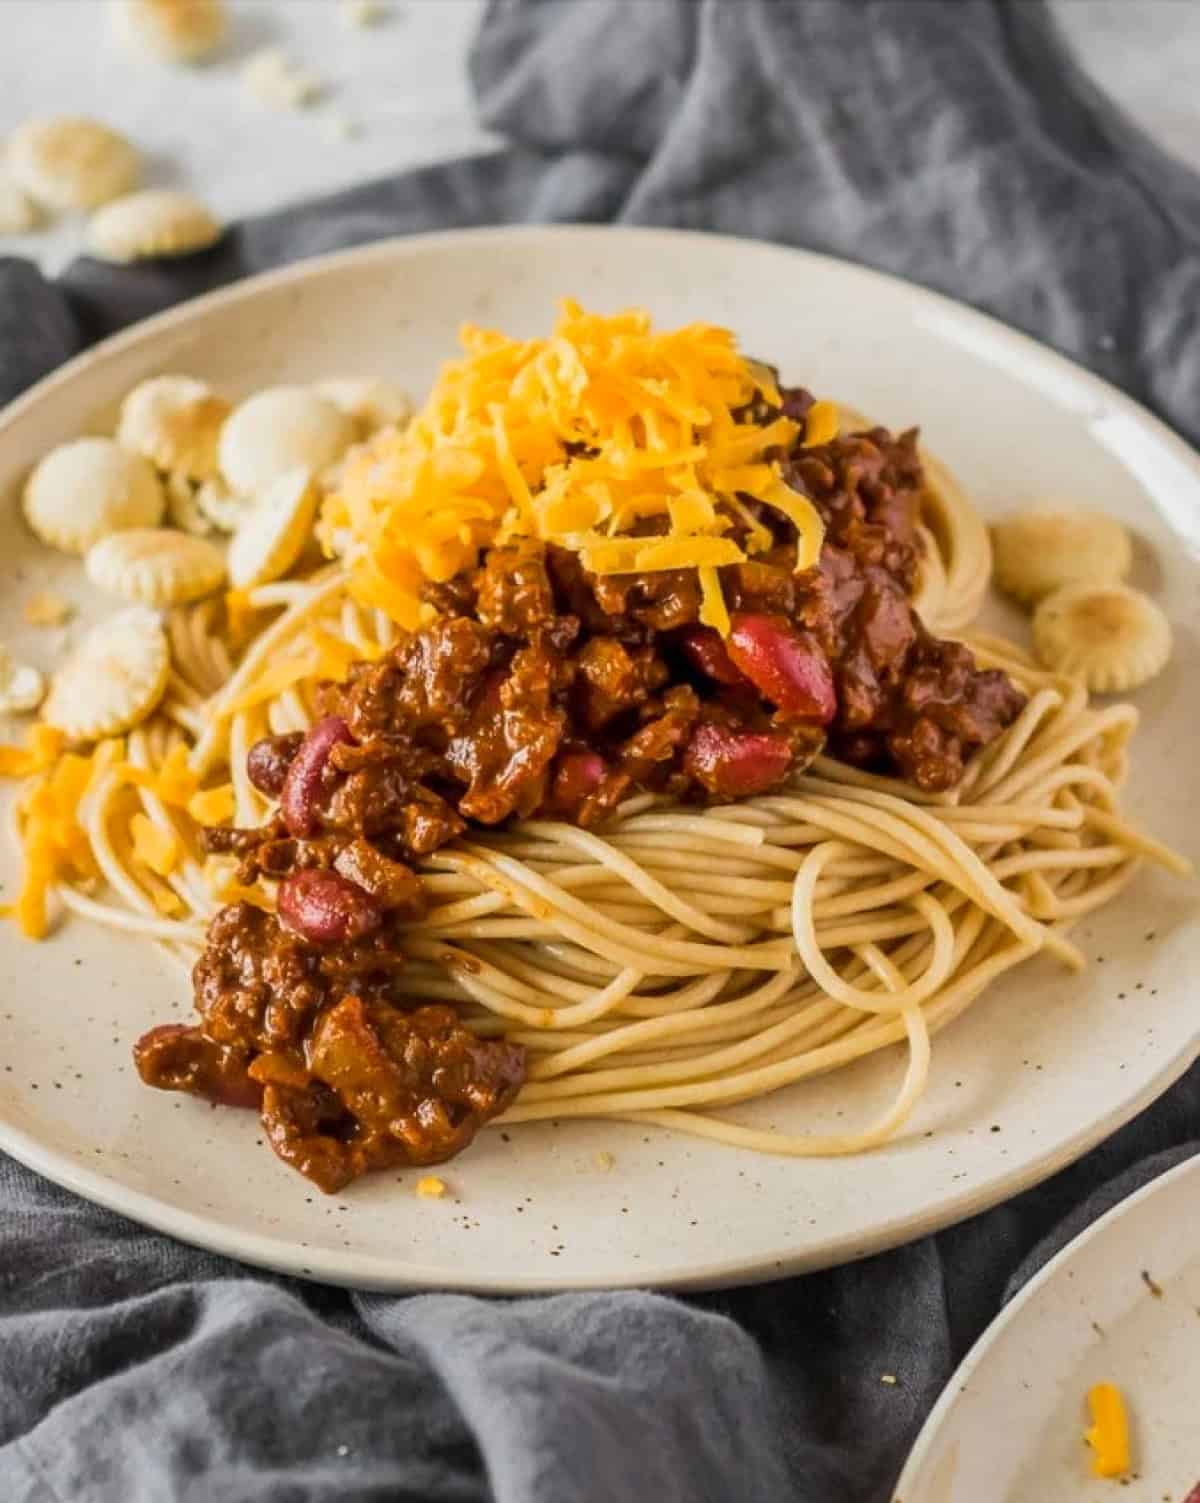 cincinnati chili over spaghetti on plates